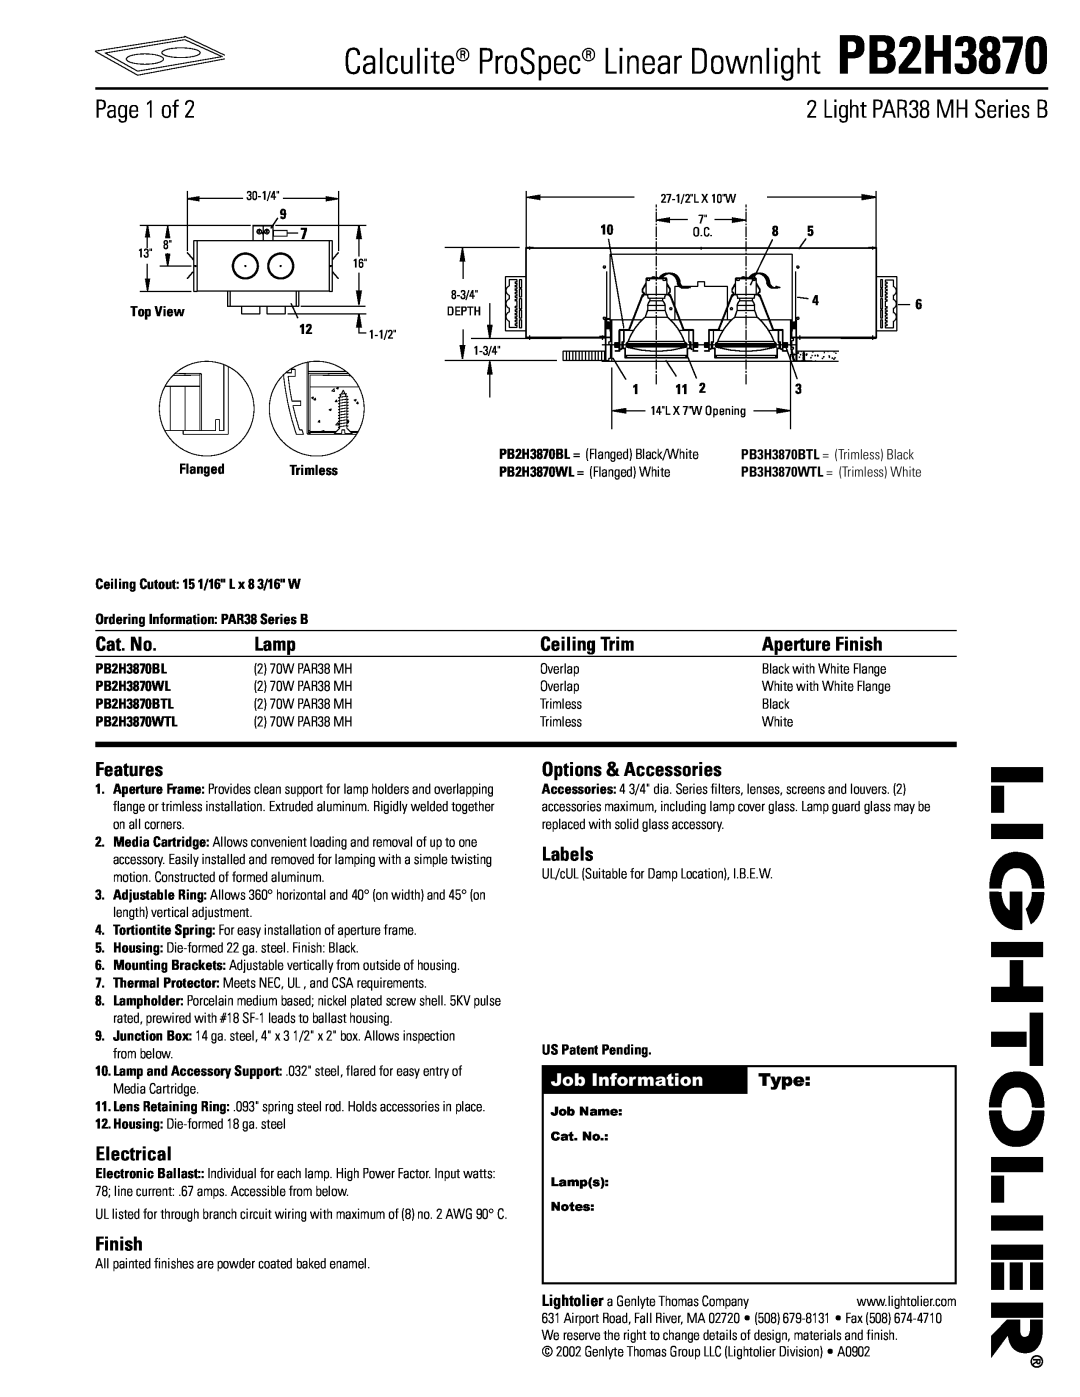 Lightolier PB2H3870 manual Page 1 of, Light PAR38 MH Series B, Cat. No, Lamp, Ceiling Trim, Aperture Finish, Features 